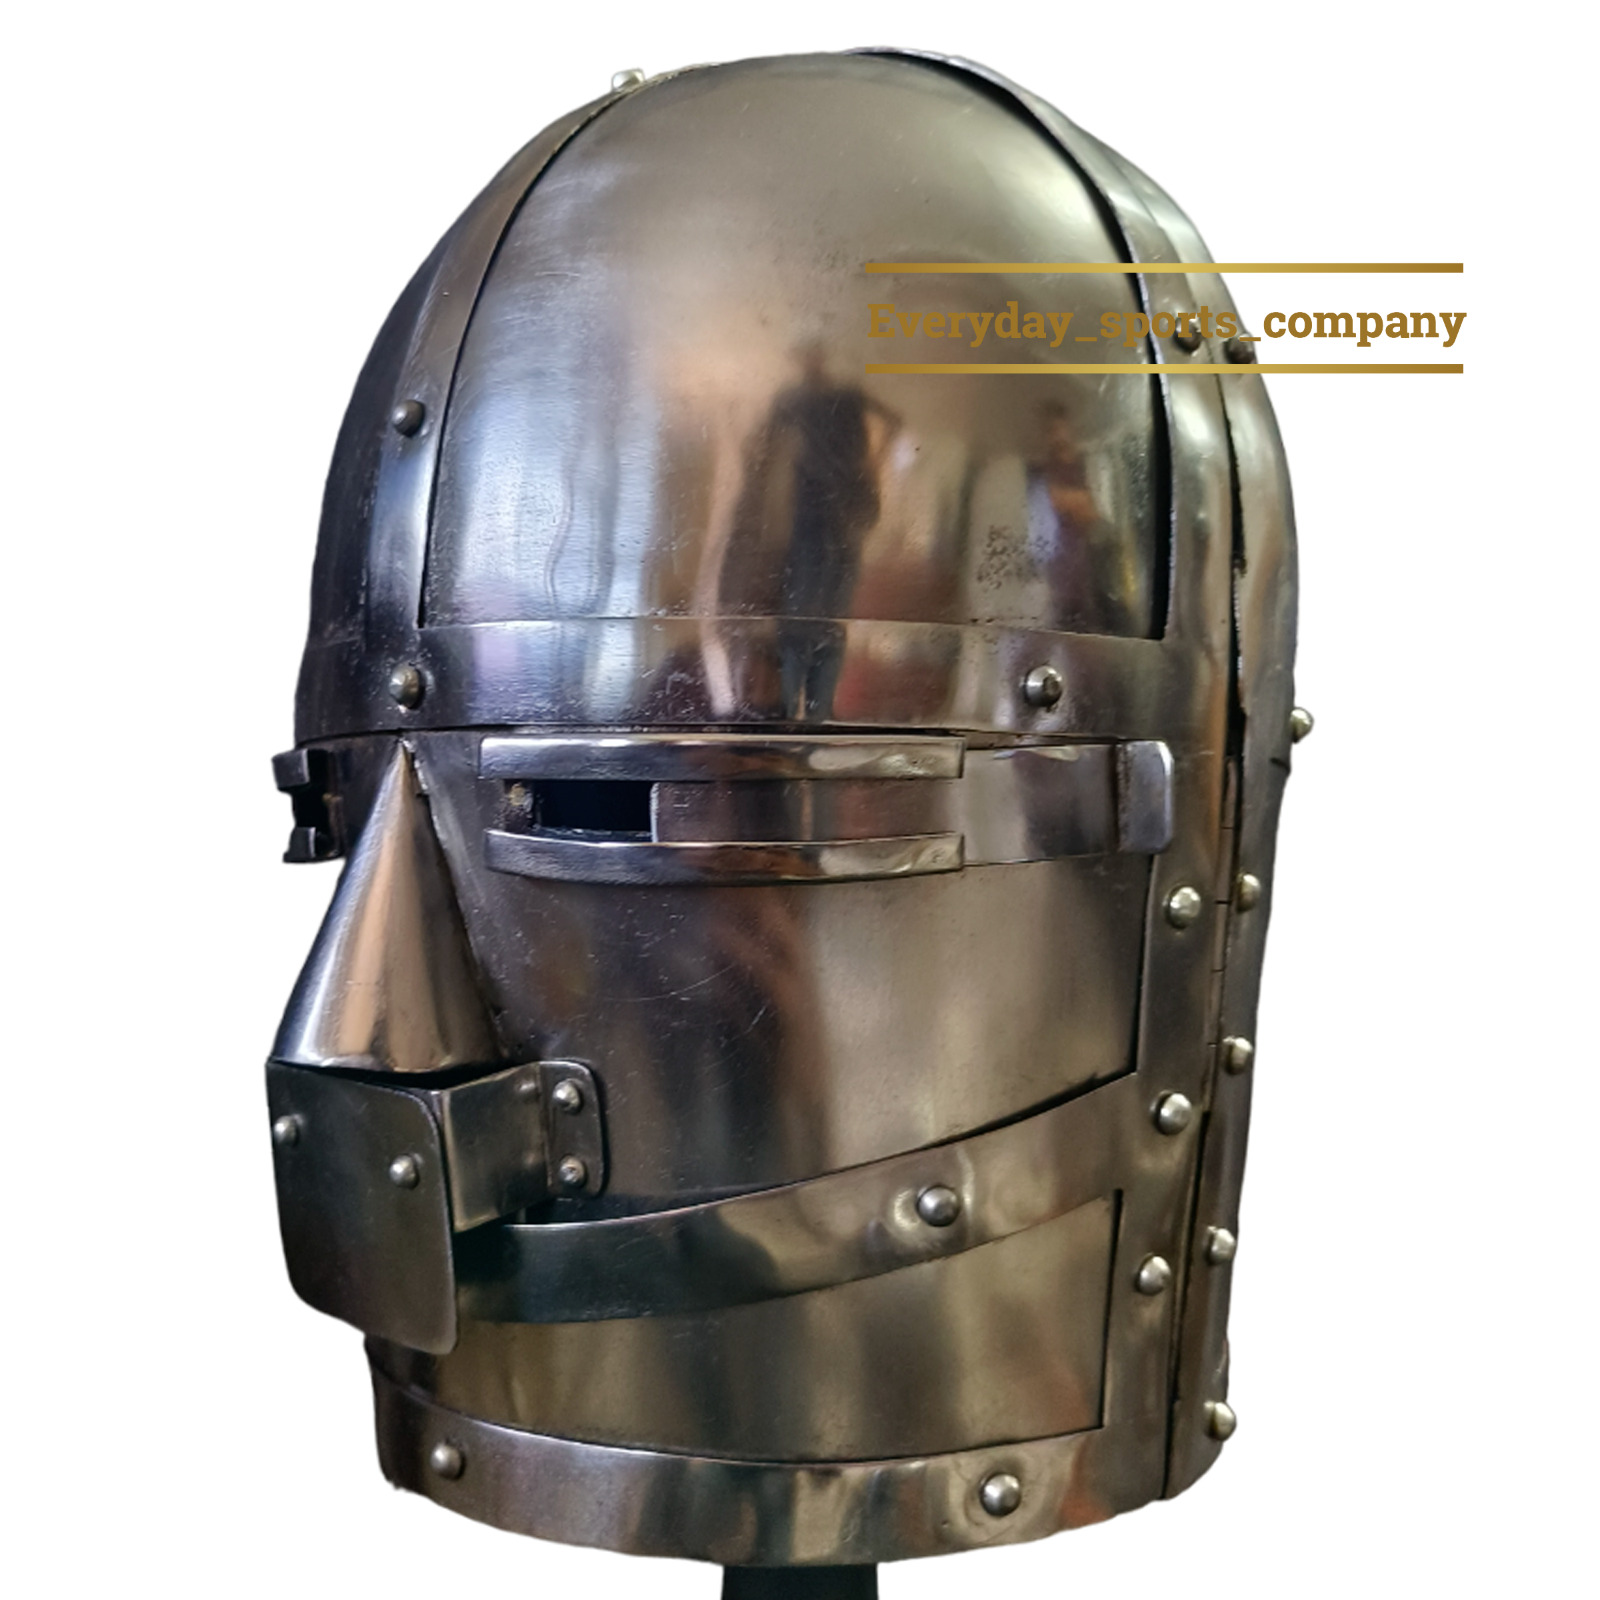 Antique Medieval Torture Helmet - Public Humiliation Device Replica